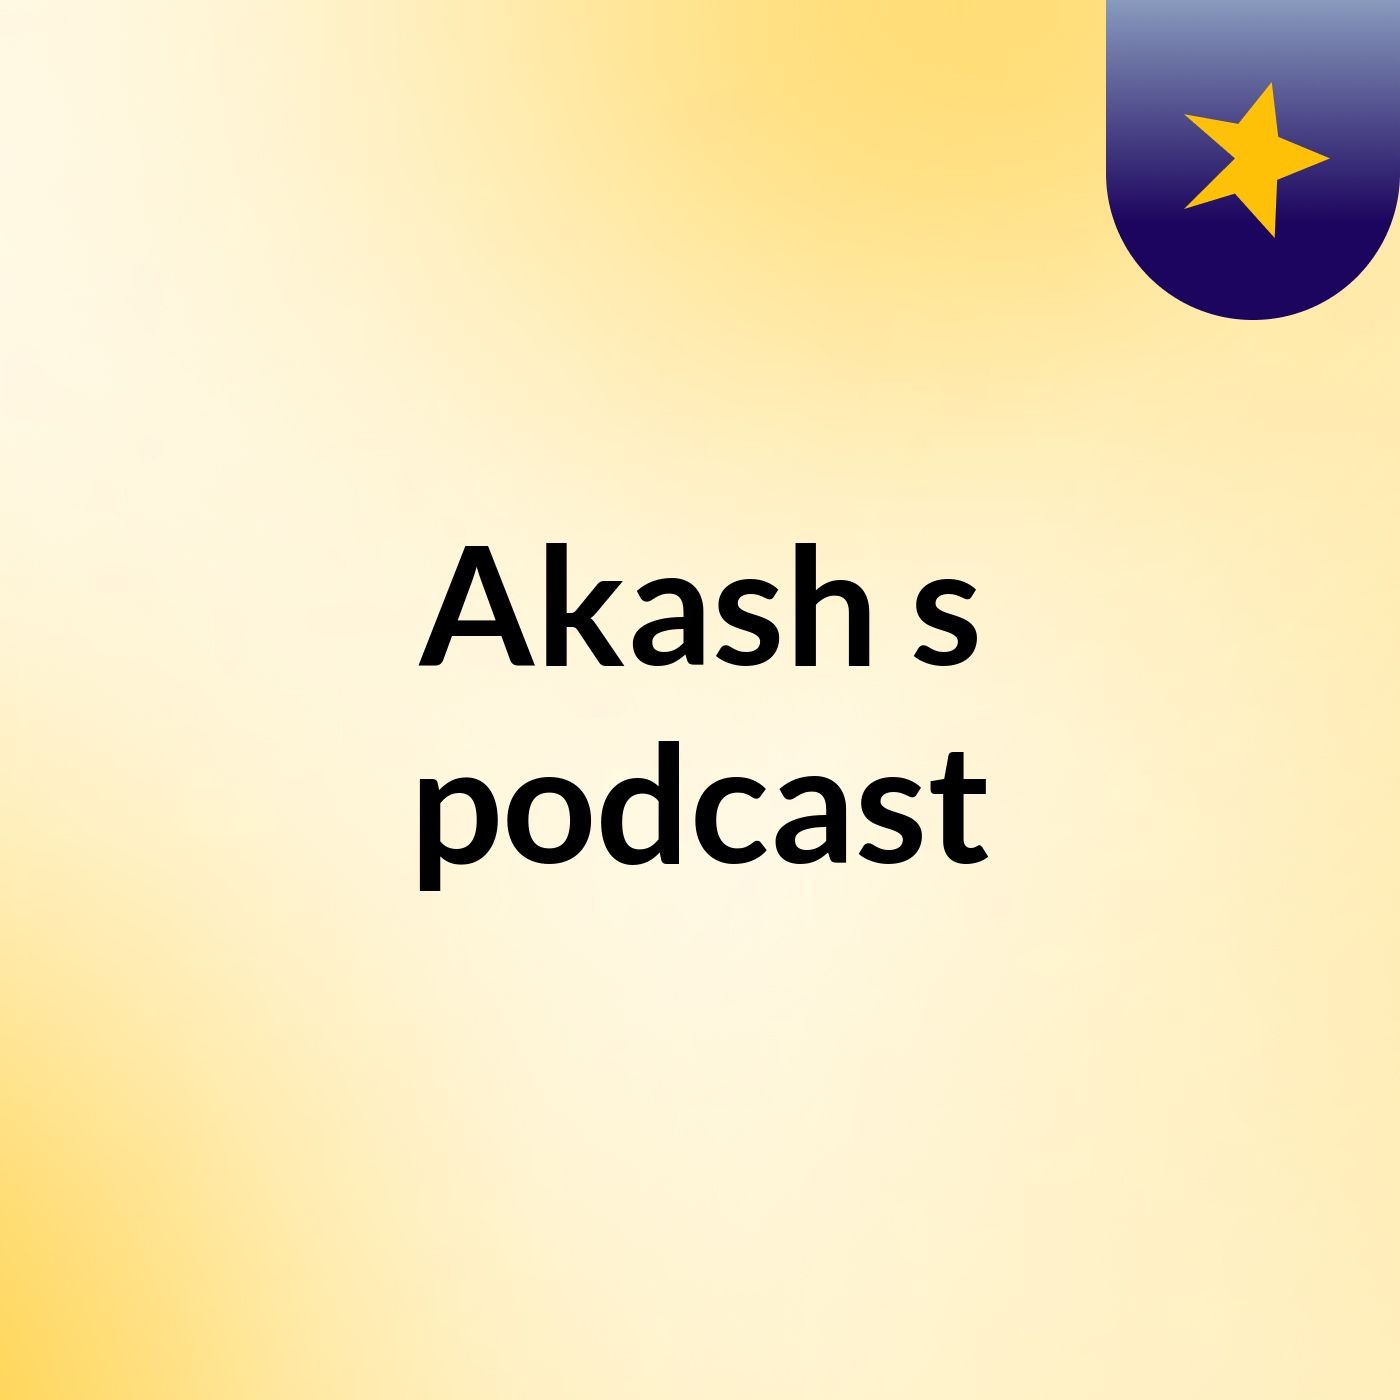 Episode 6 - Akash's podcast